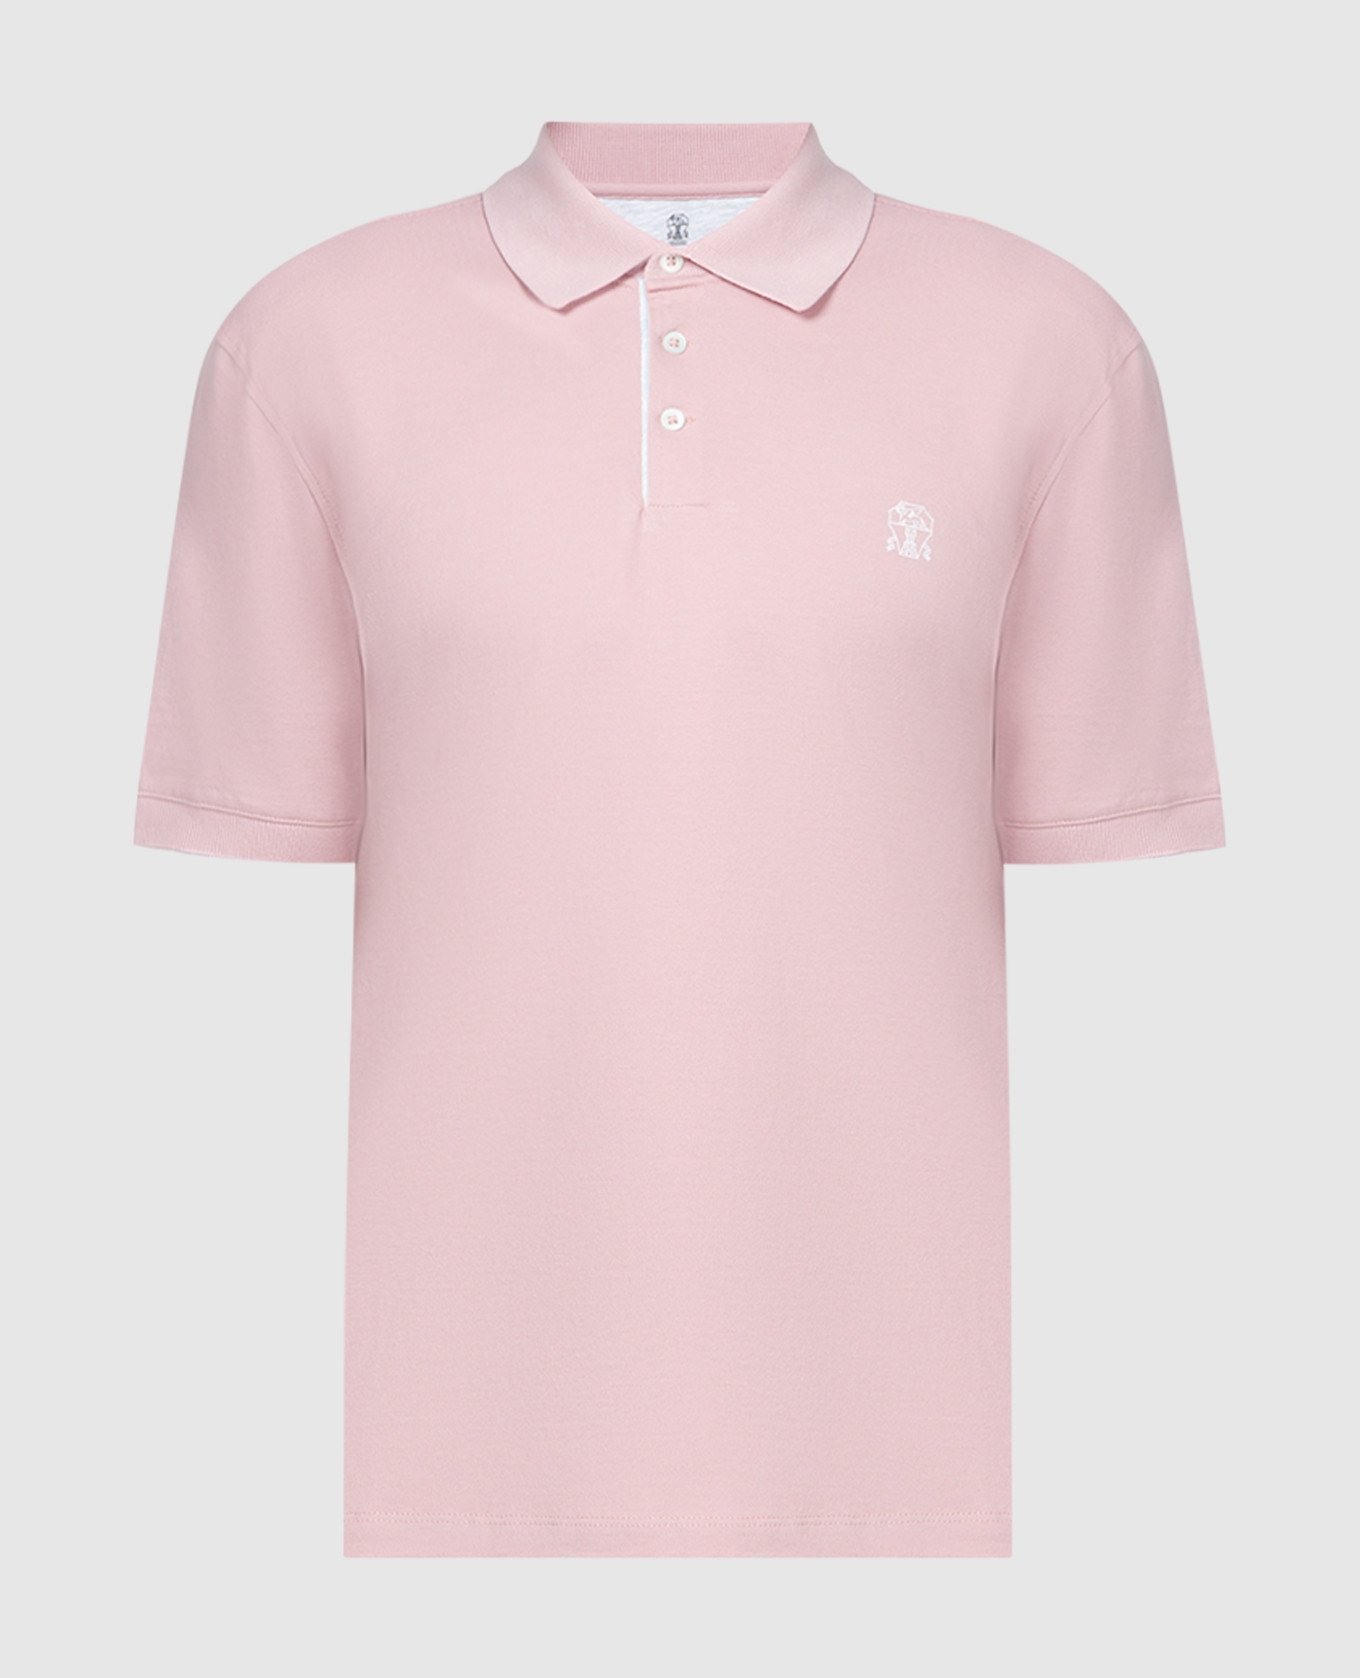 Pink polo shirt with logo print